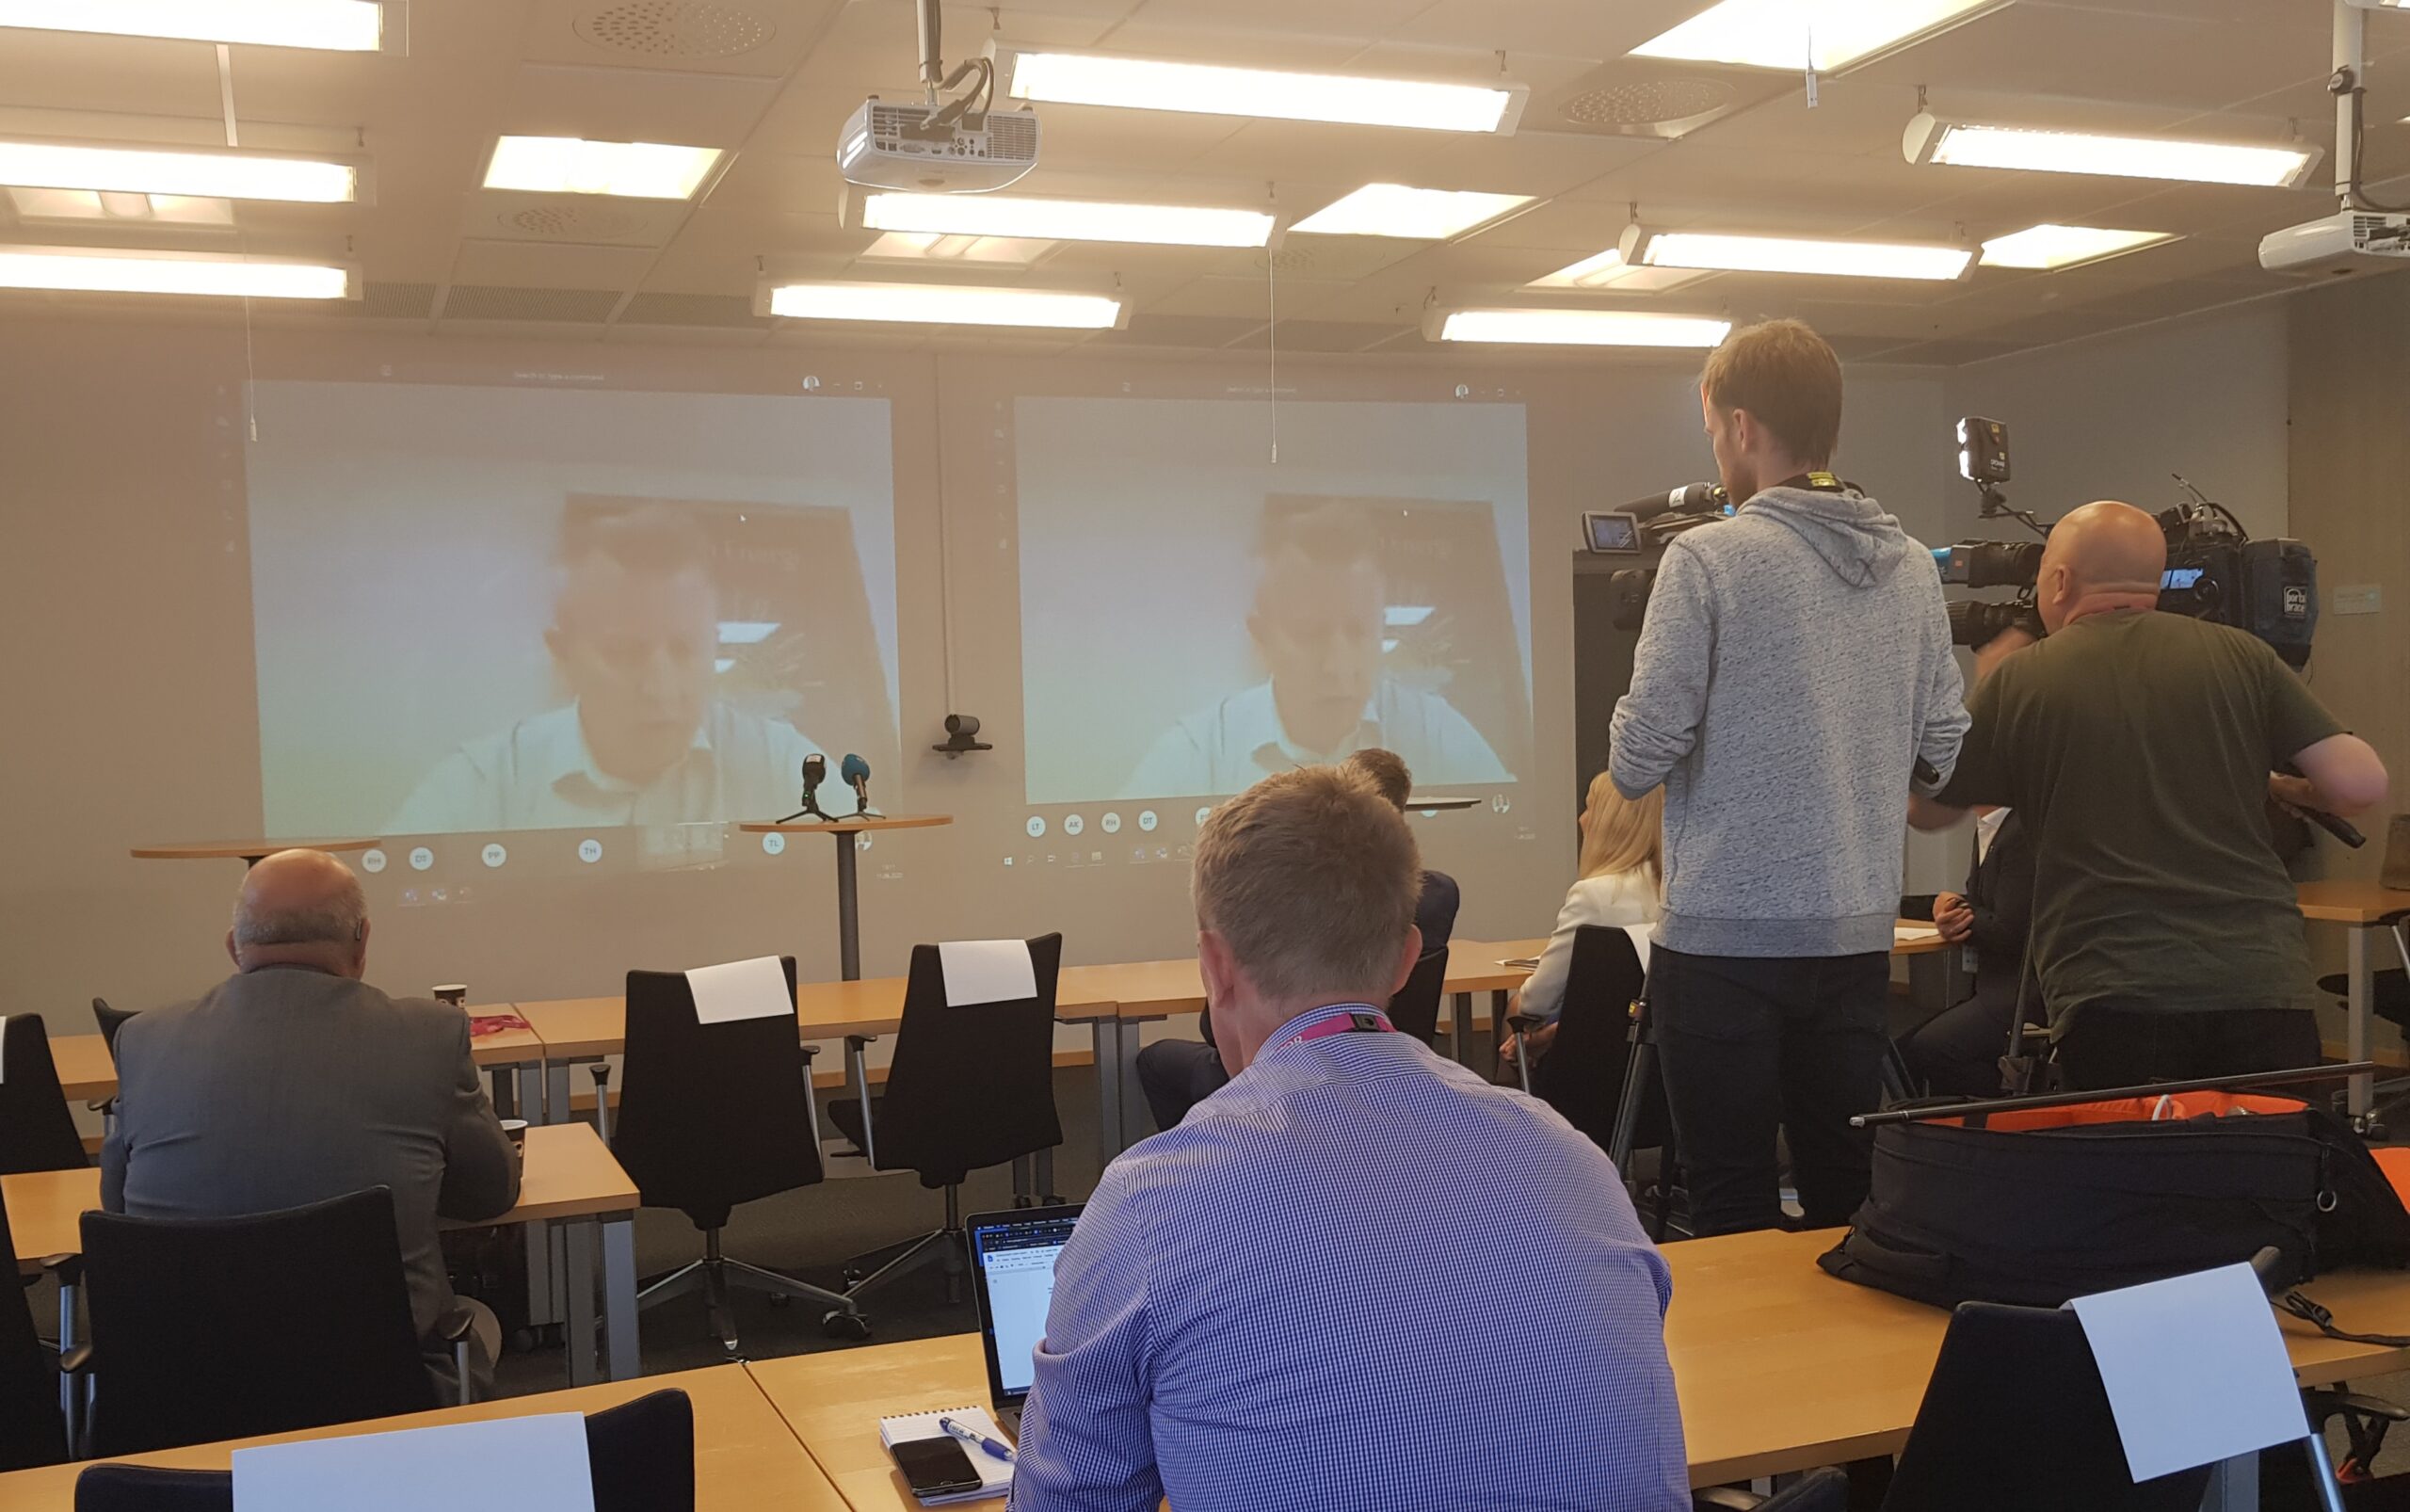 Forbundsleder Frode Alfheim deltok på pressekonferansen via videolink. Foto: Atle Espen Helgesen